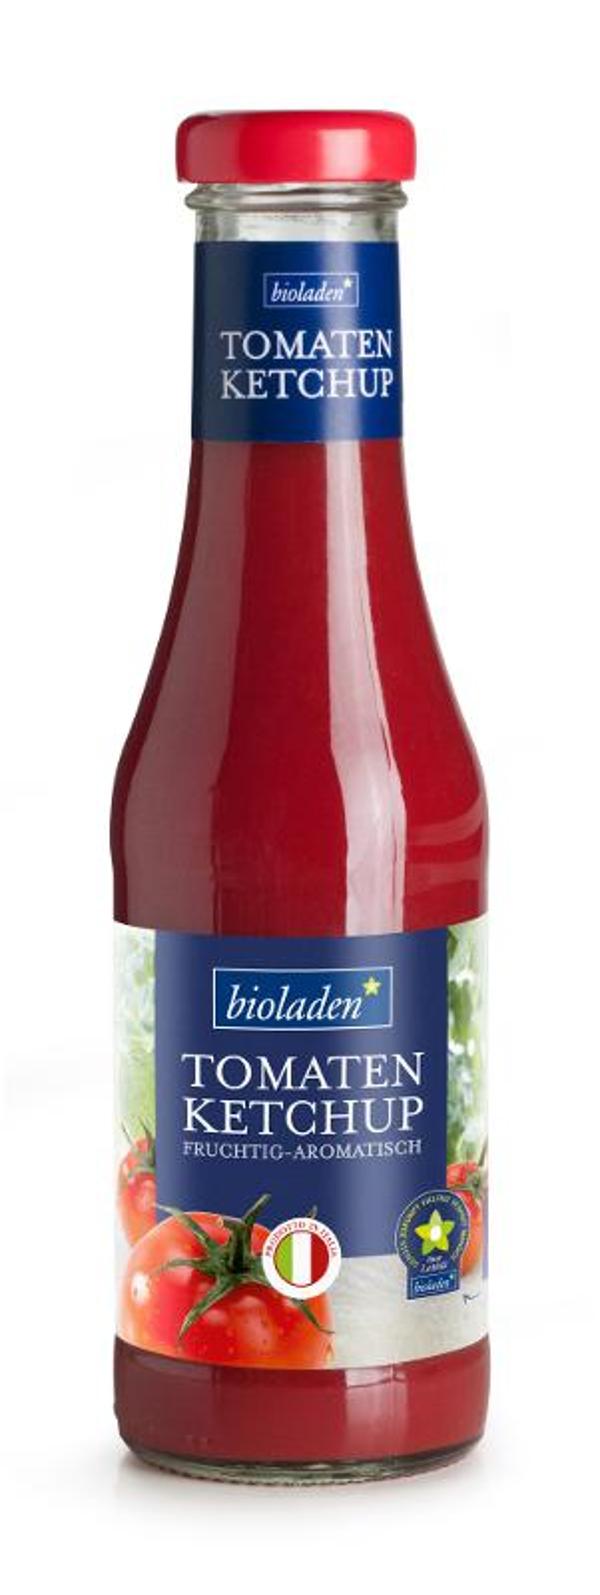 Produktfoto zu Tomaten Ketchup 6x450ml